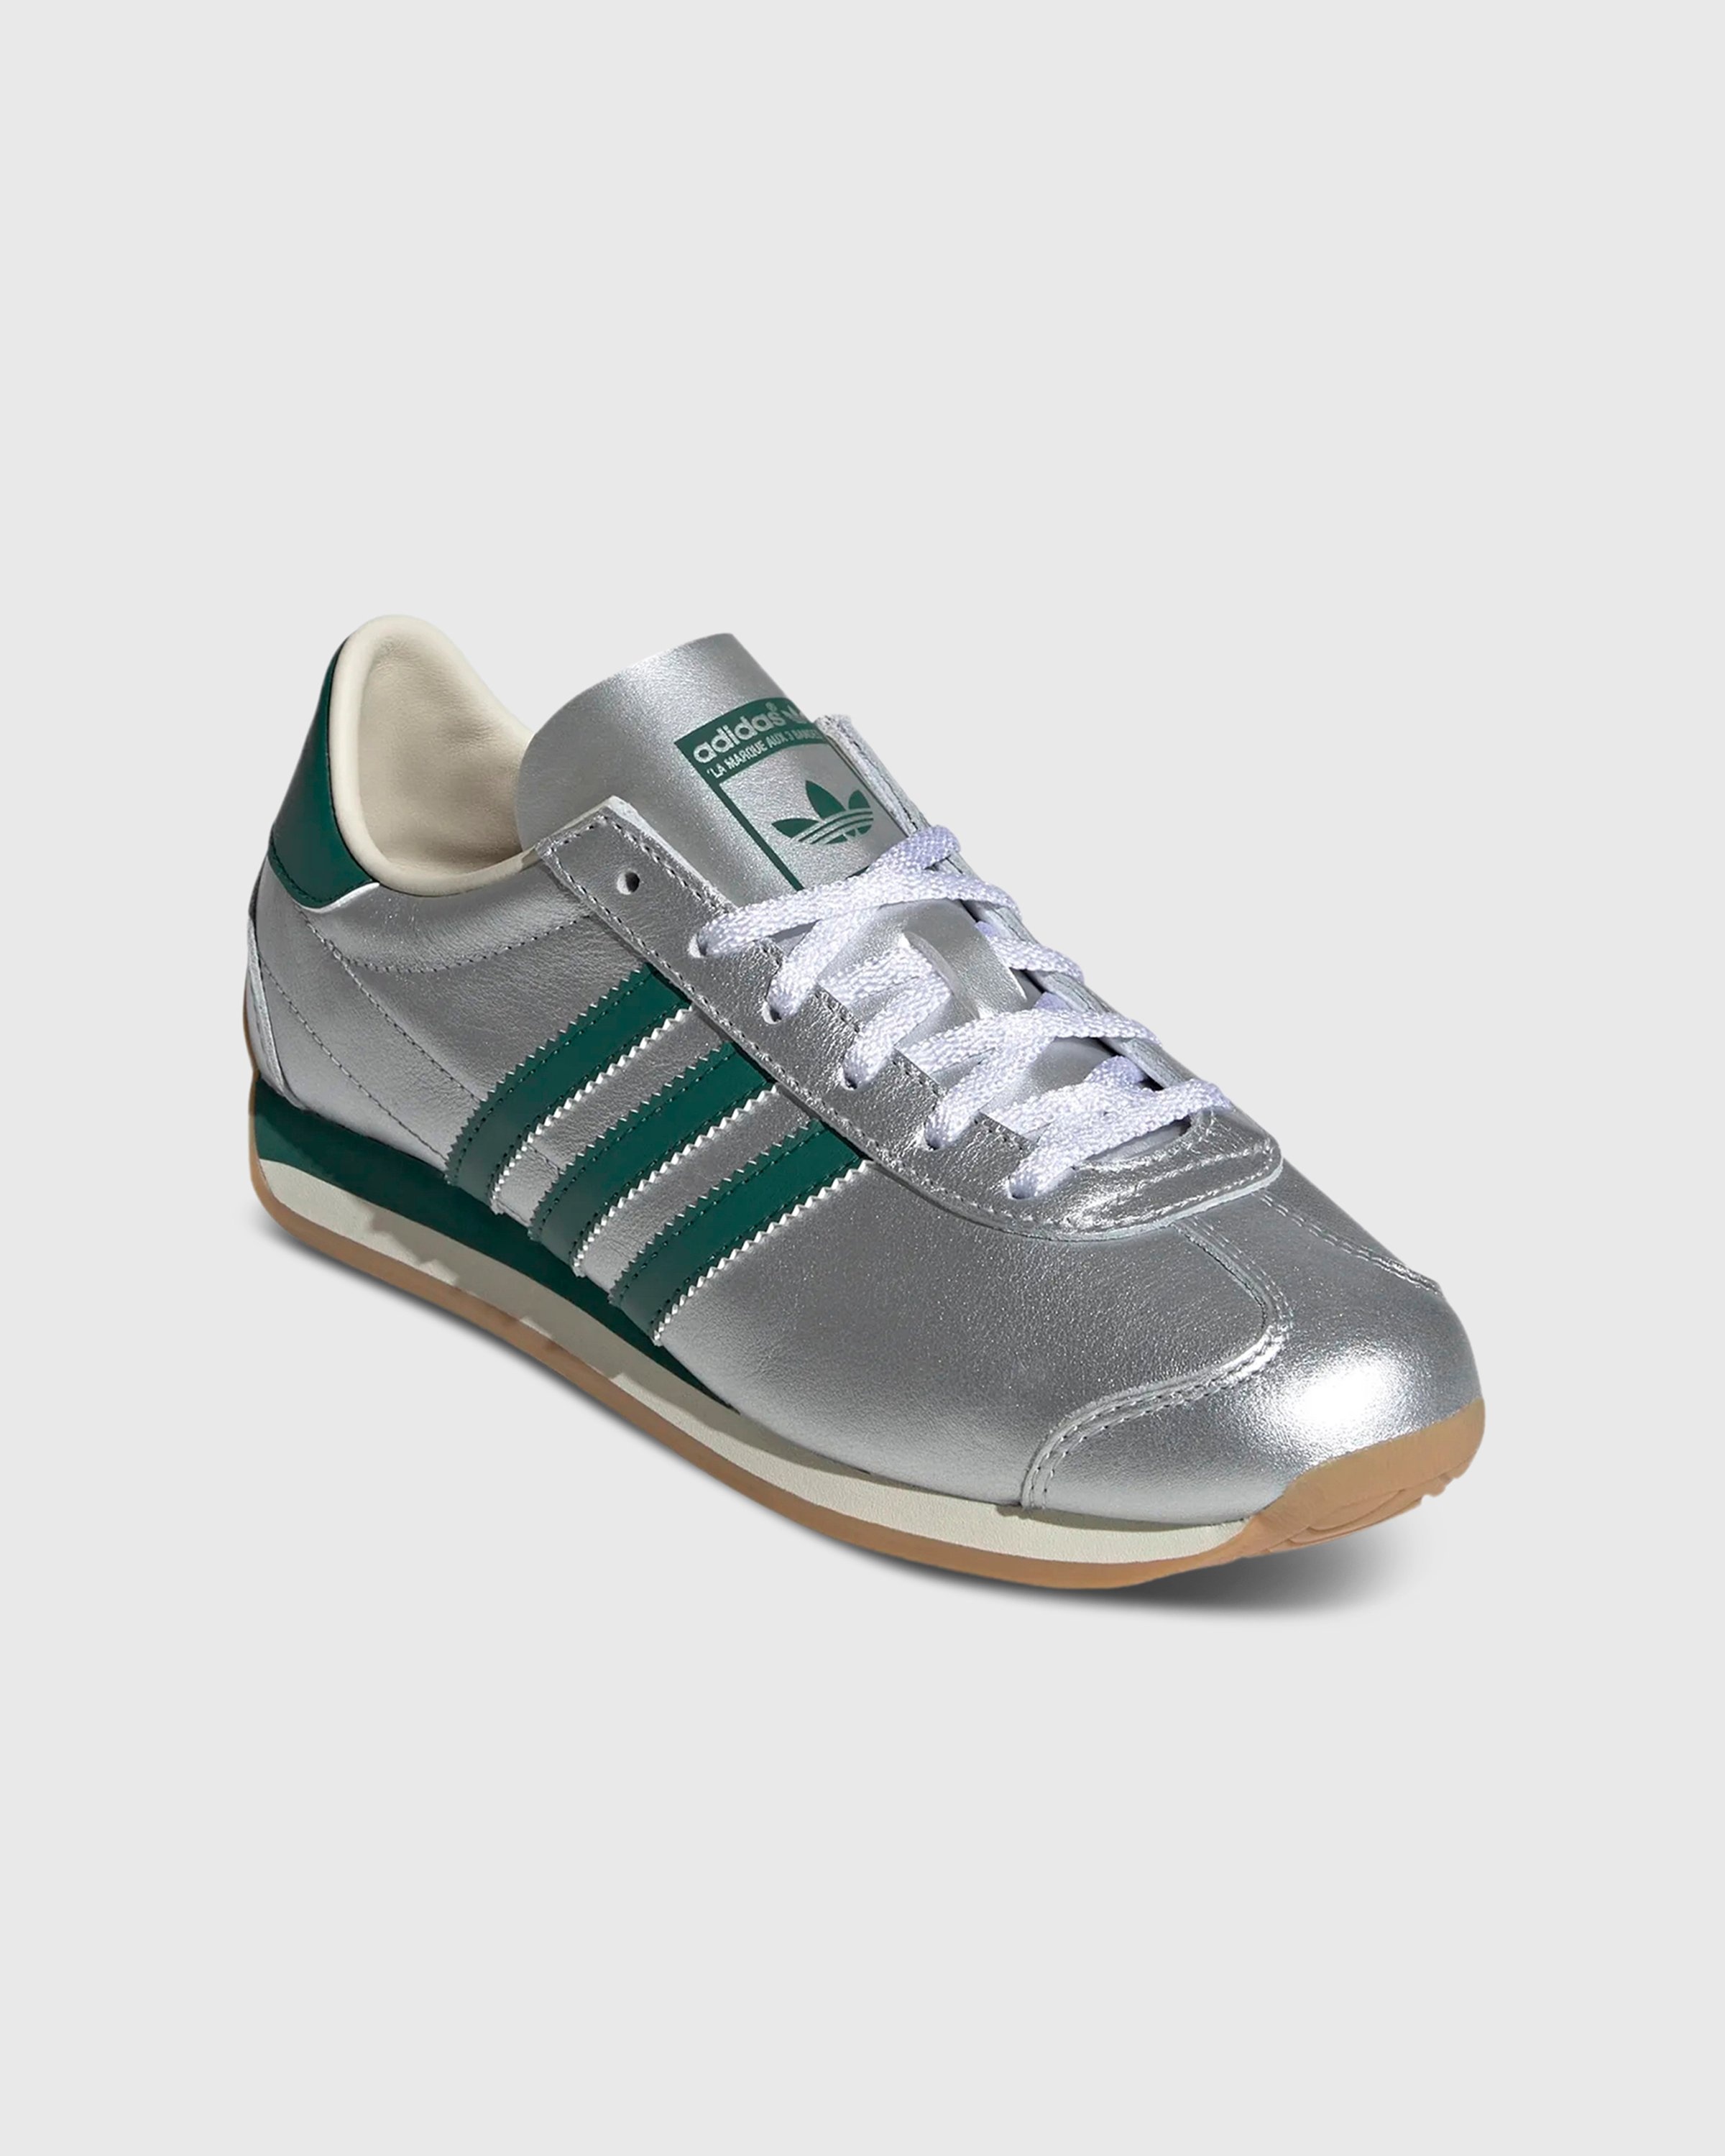 Adidas – Country OG Silver Metallic/Collegiate Green/Core White